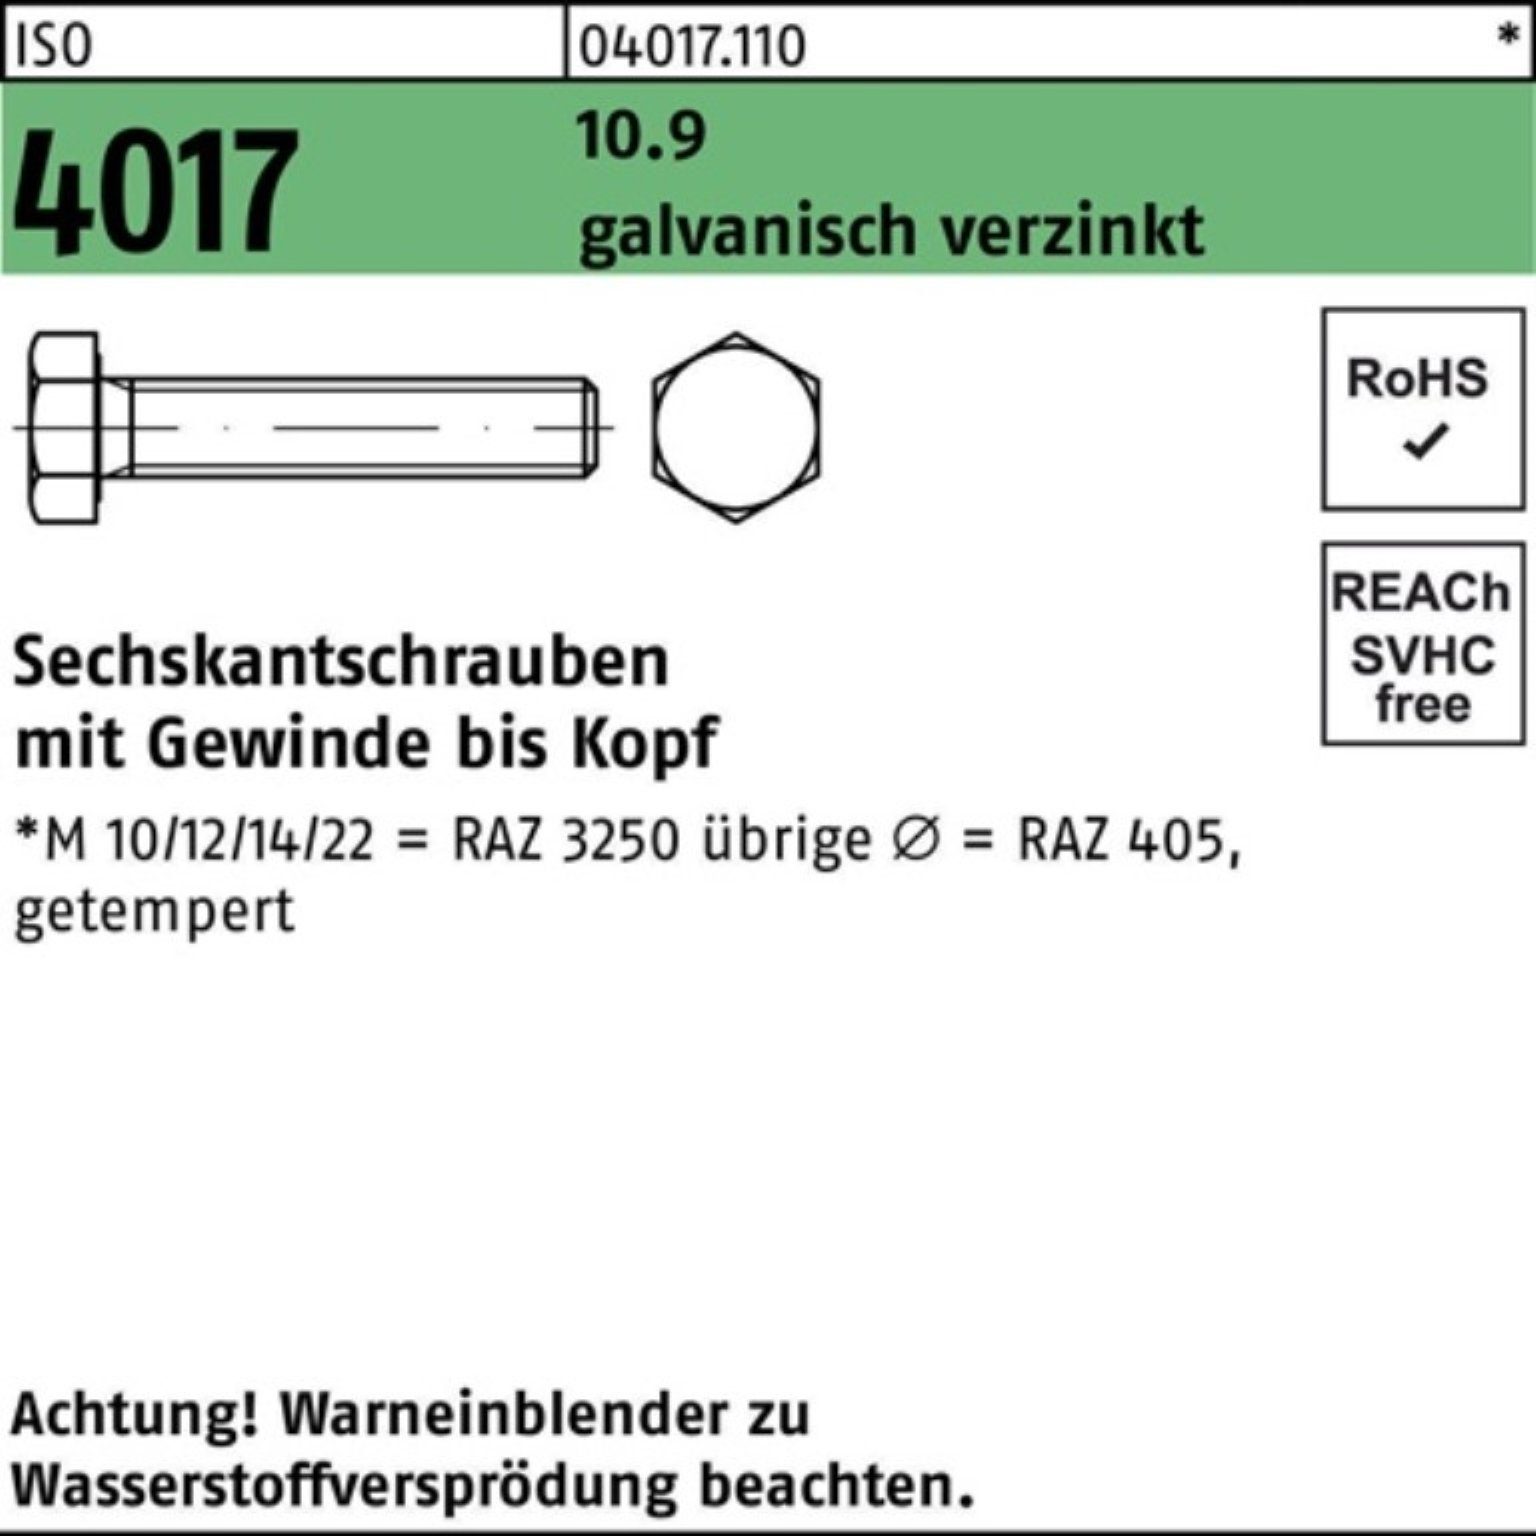 ISO M27x galv.verz. 10.9 70 Sechskantschraube 10 Bufab VG 4017 St Pack 100er Sechskantschraube